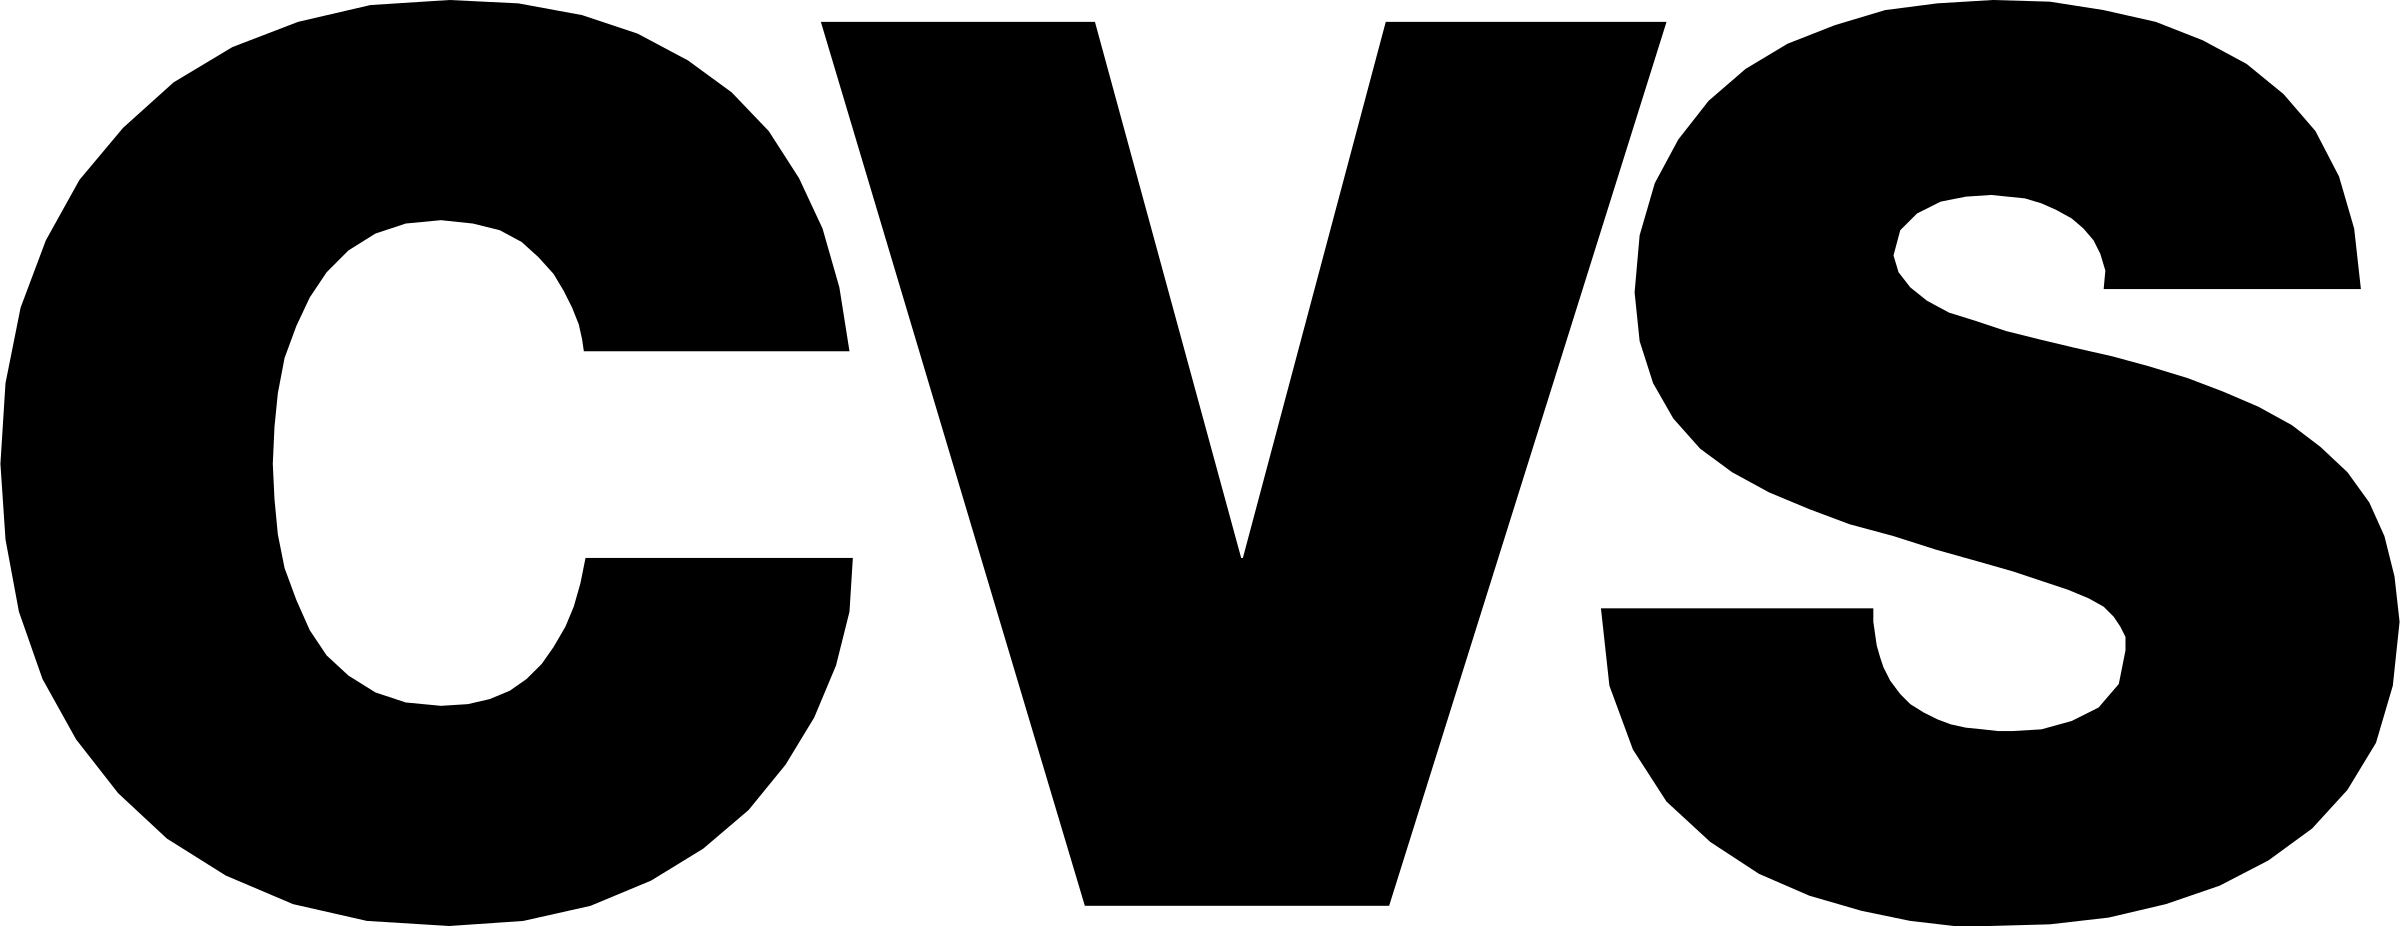 cvs-logo-logo-black-and-white